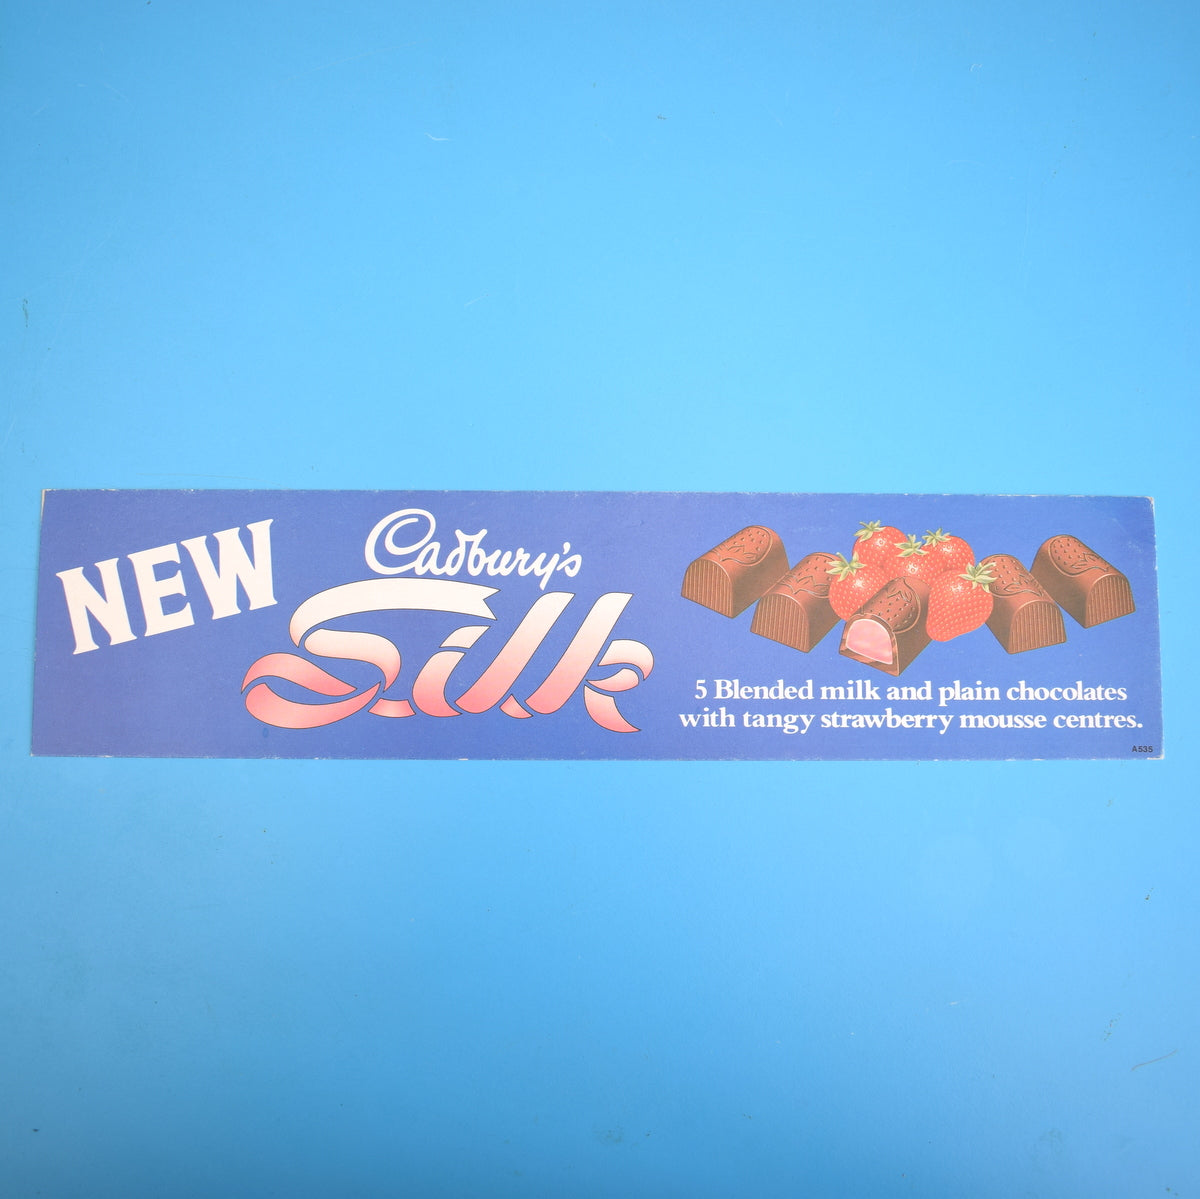 Vintage 1990s Cadbury's Chocolate Advertising Signs